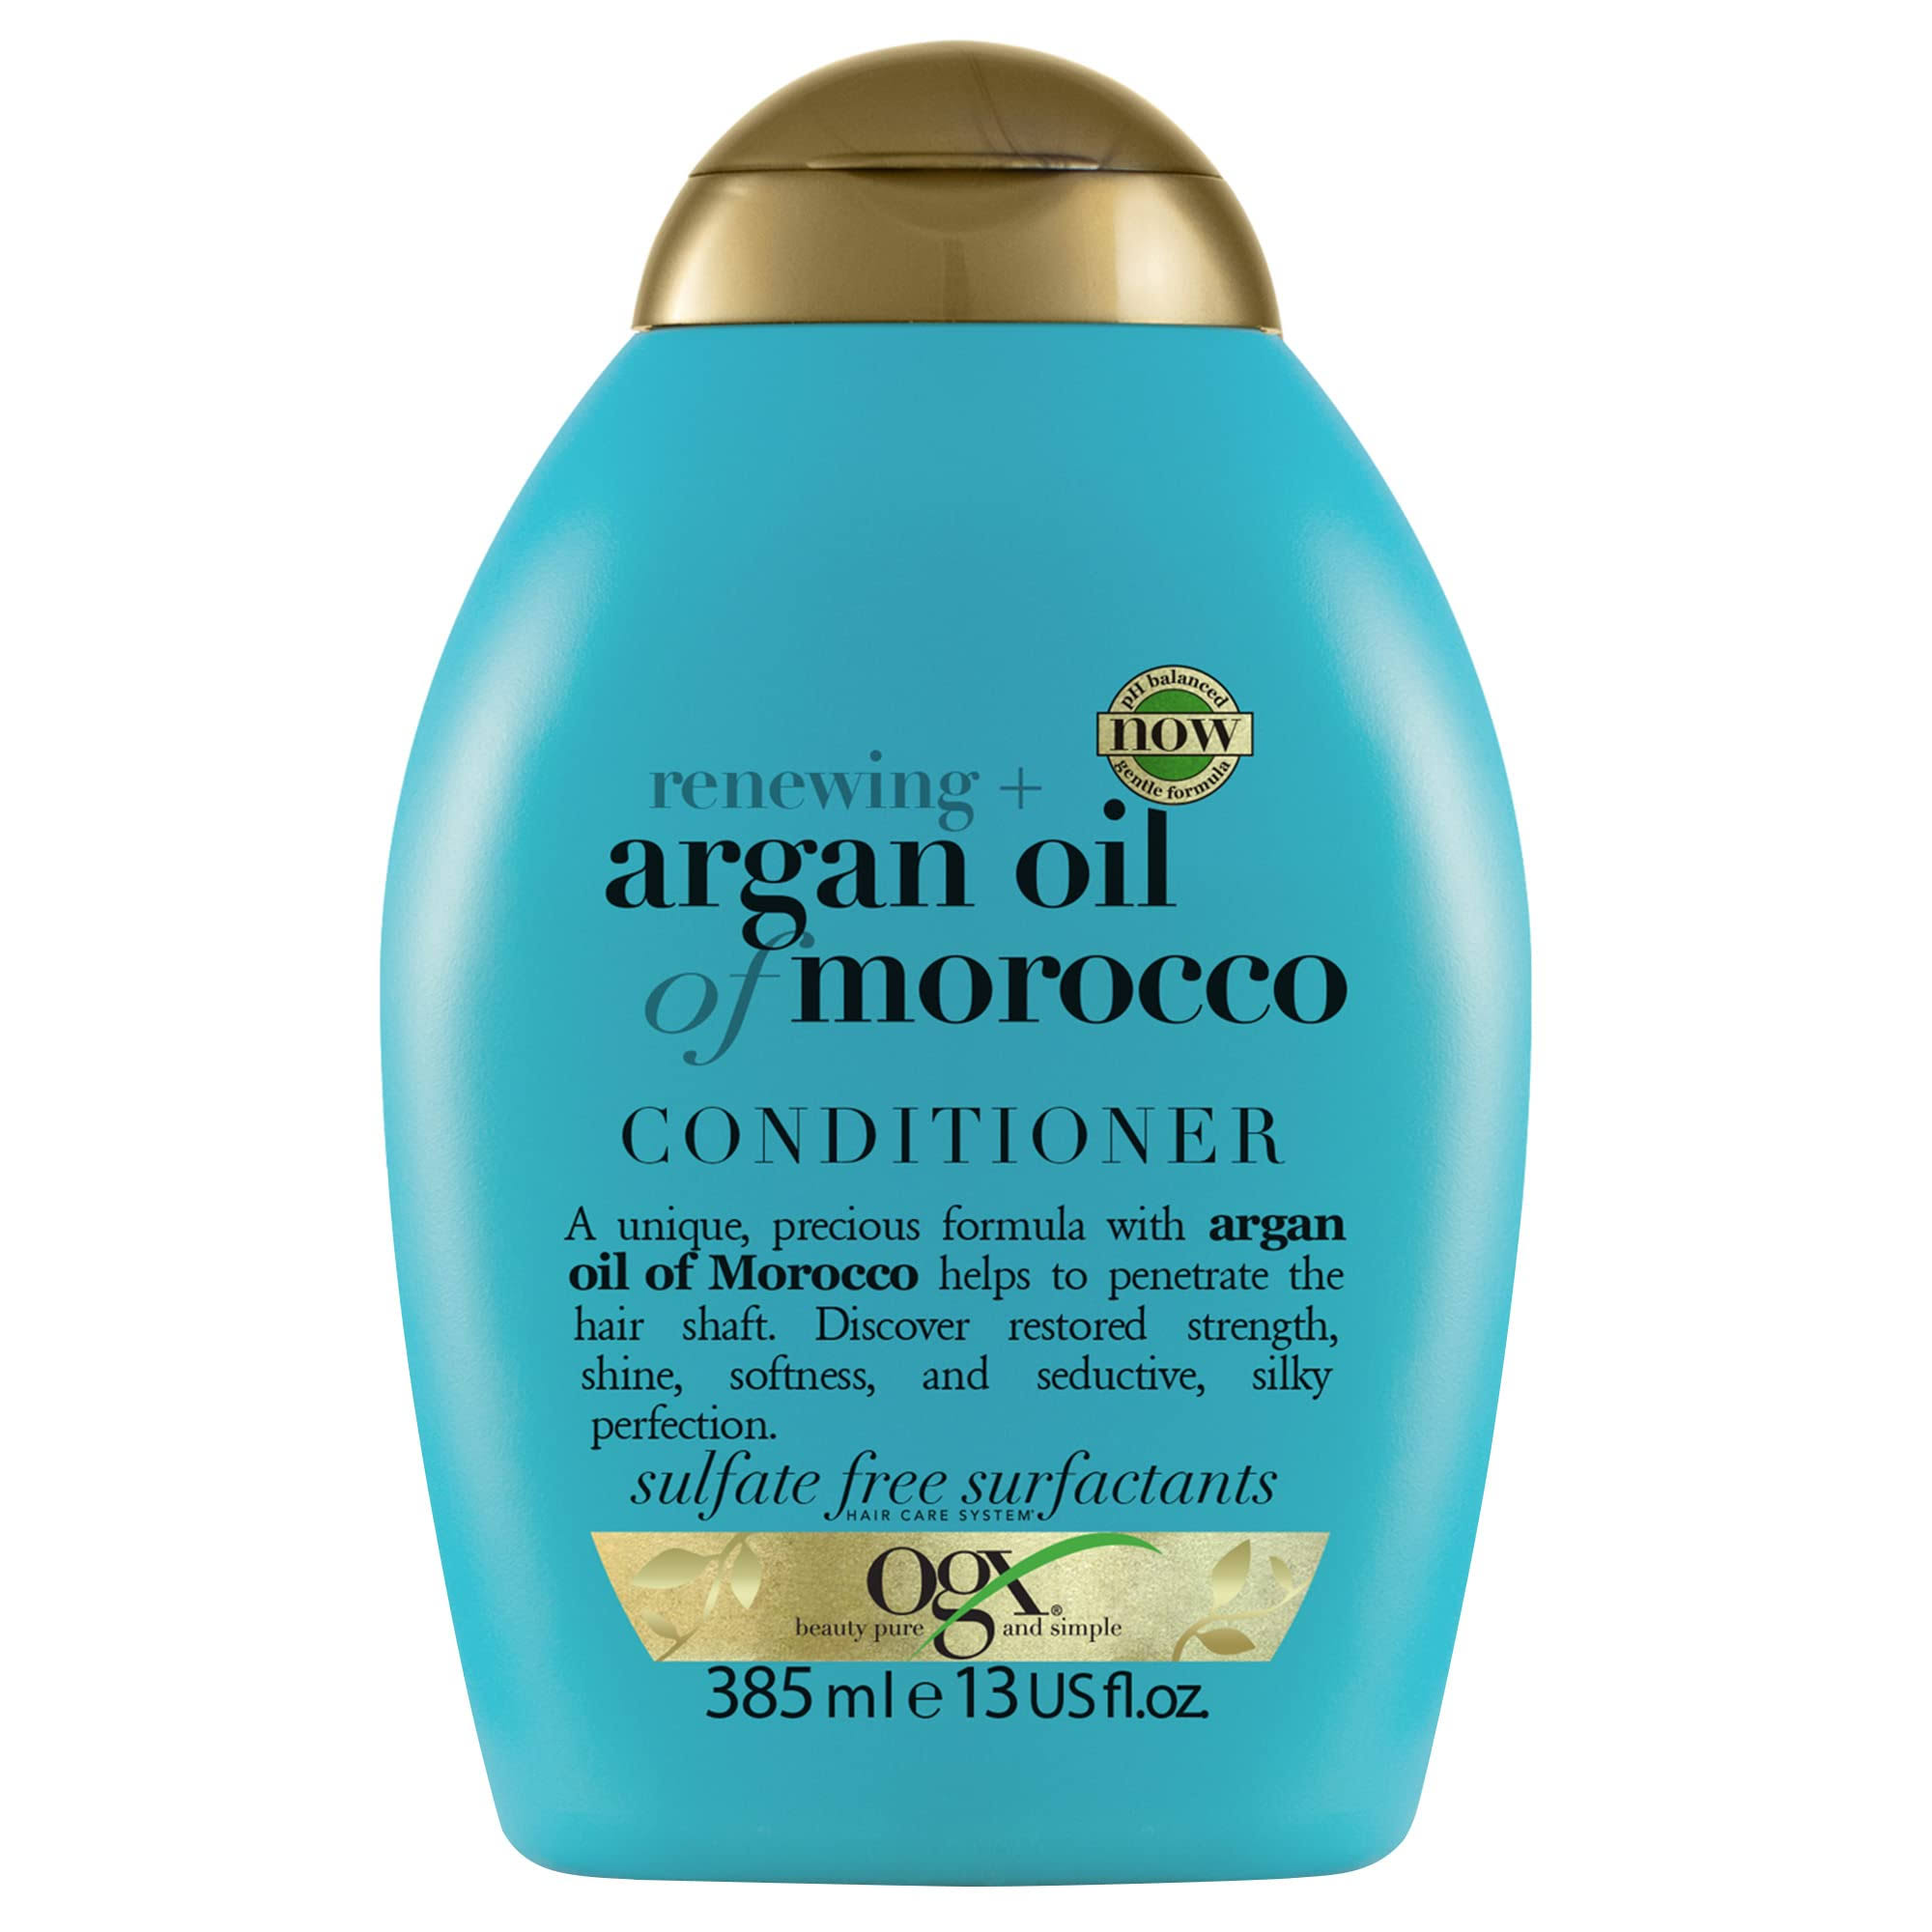 Ogx Renewing Argan Oil of Morocco Conditioner - 385ml